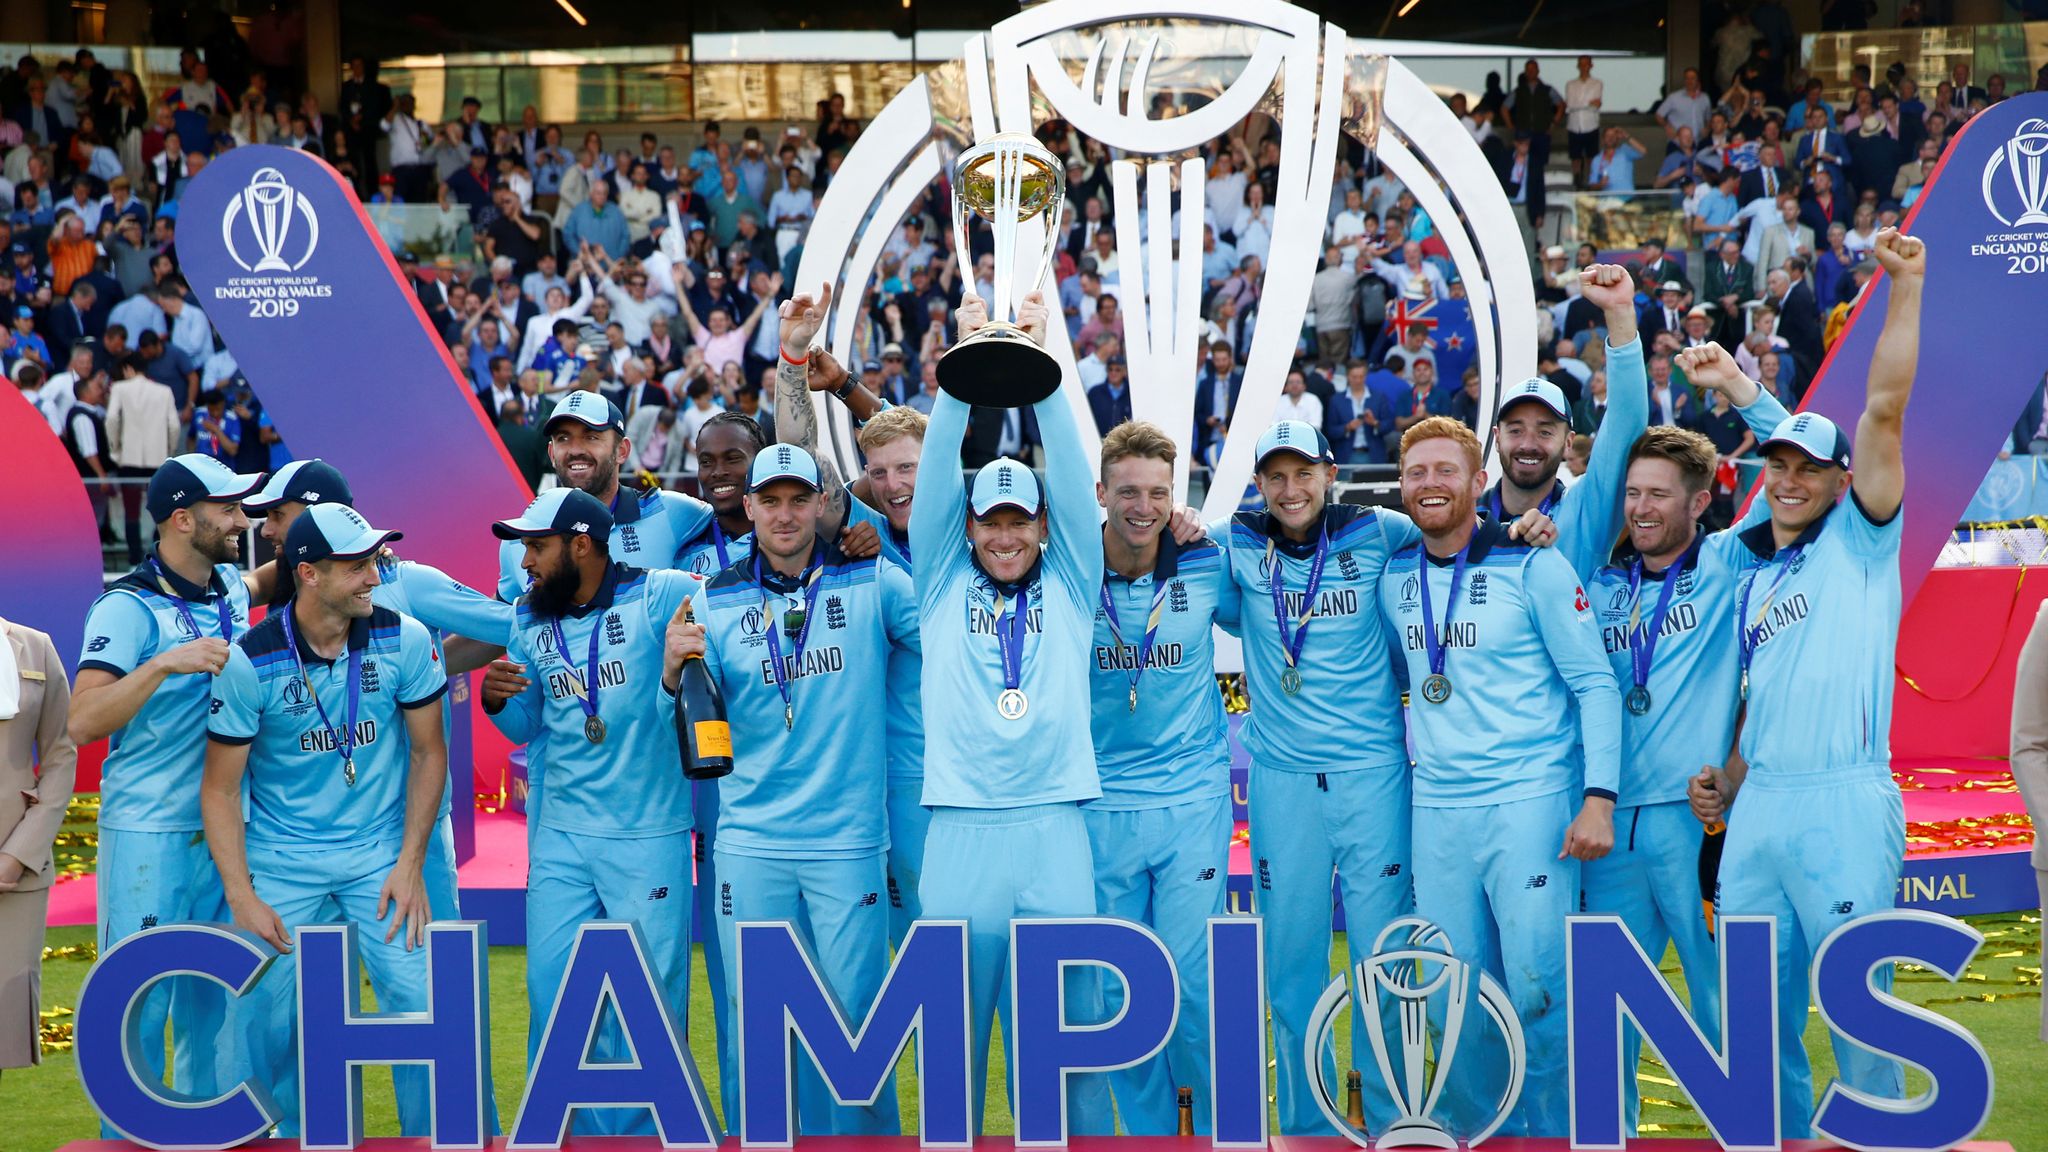 cricket World Cup winners hailed heroes 